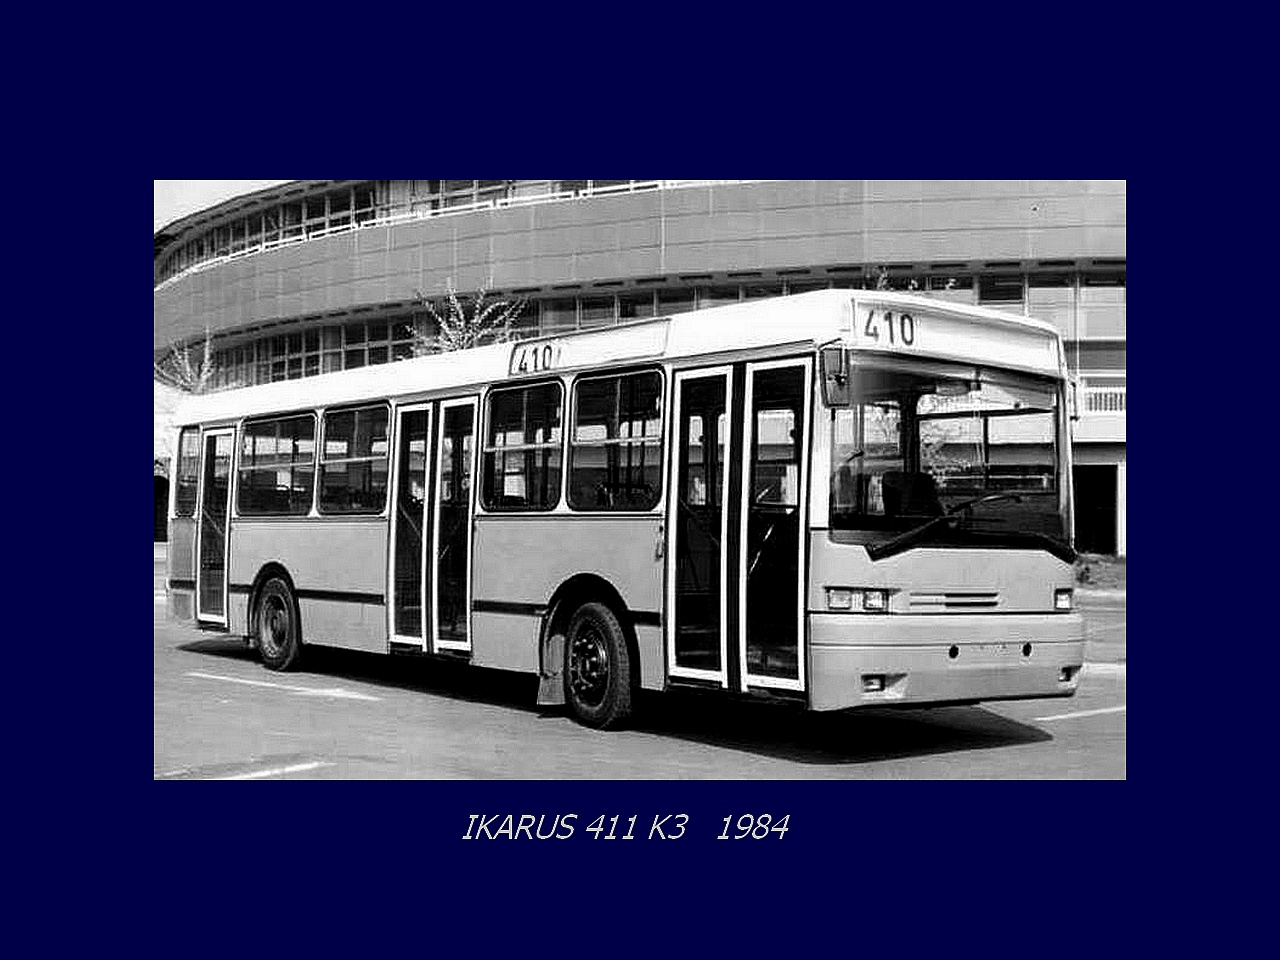 Magyar Busz, Ikarus 411 K3 1984